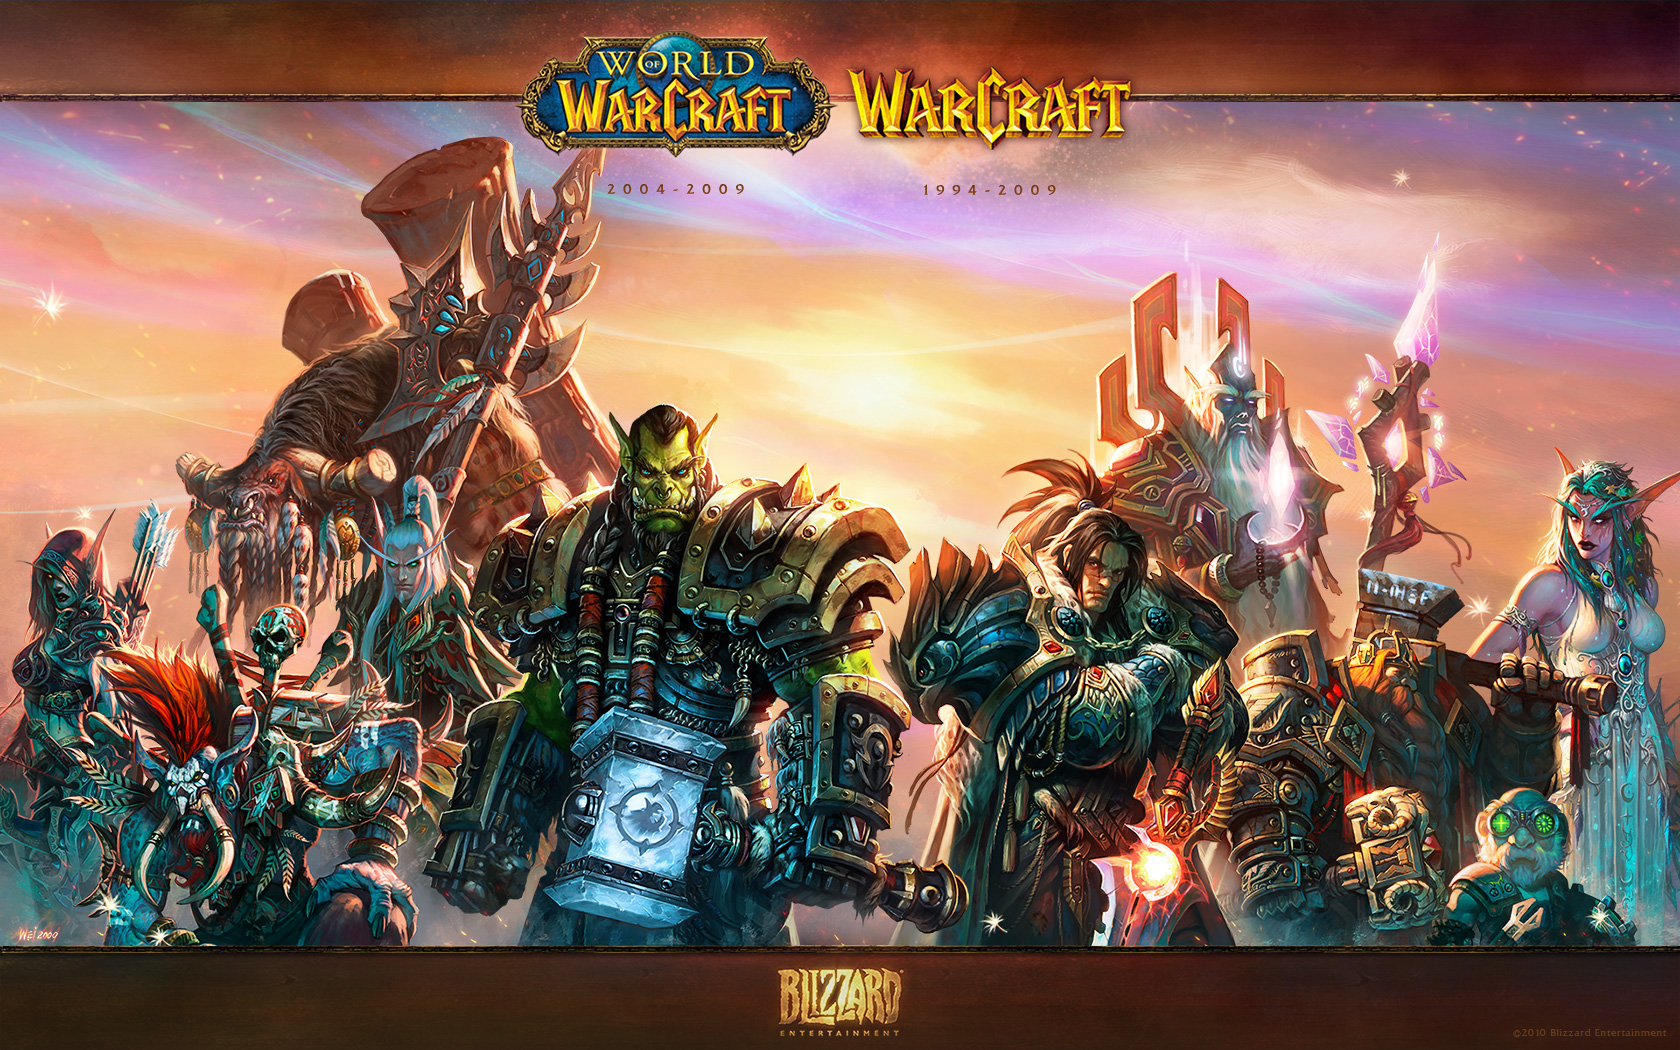 Warcraft World Of Warcraft Video Games Thrall Horde Alliance King Varian Wrynn Video Game Art Video  1680x1050